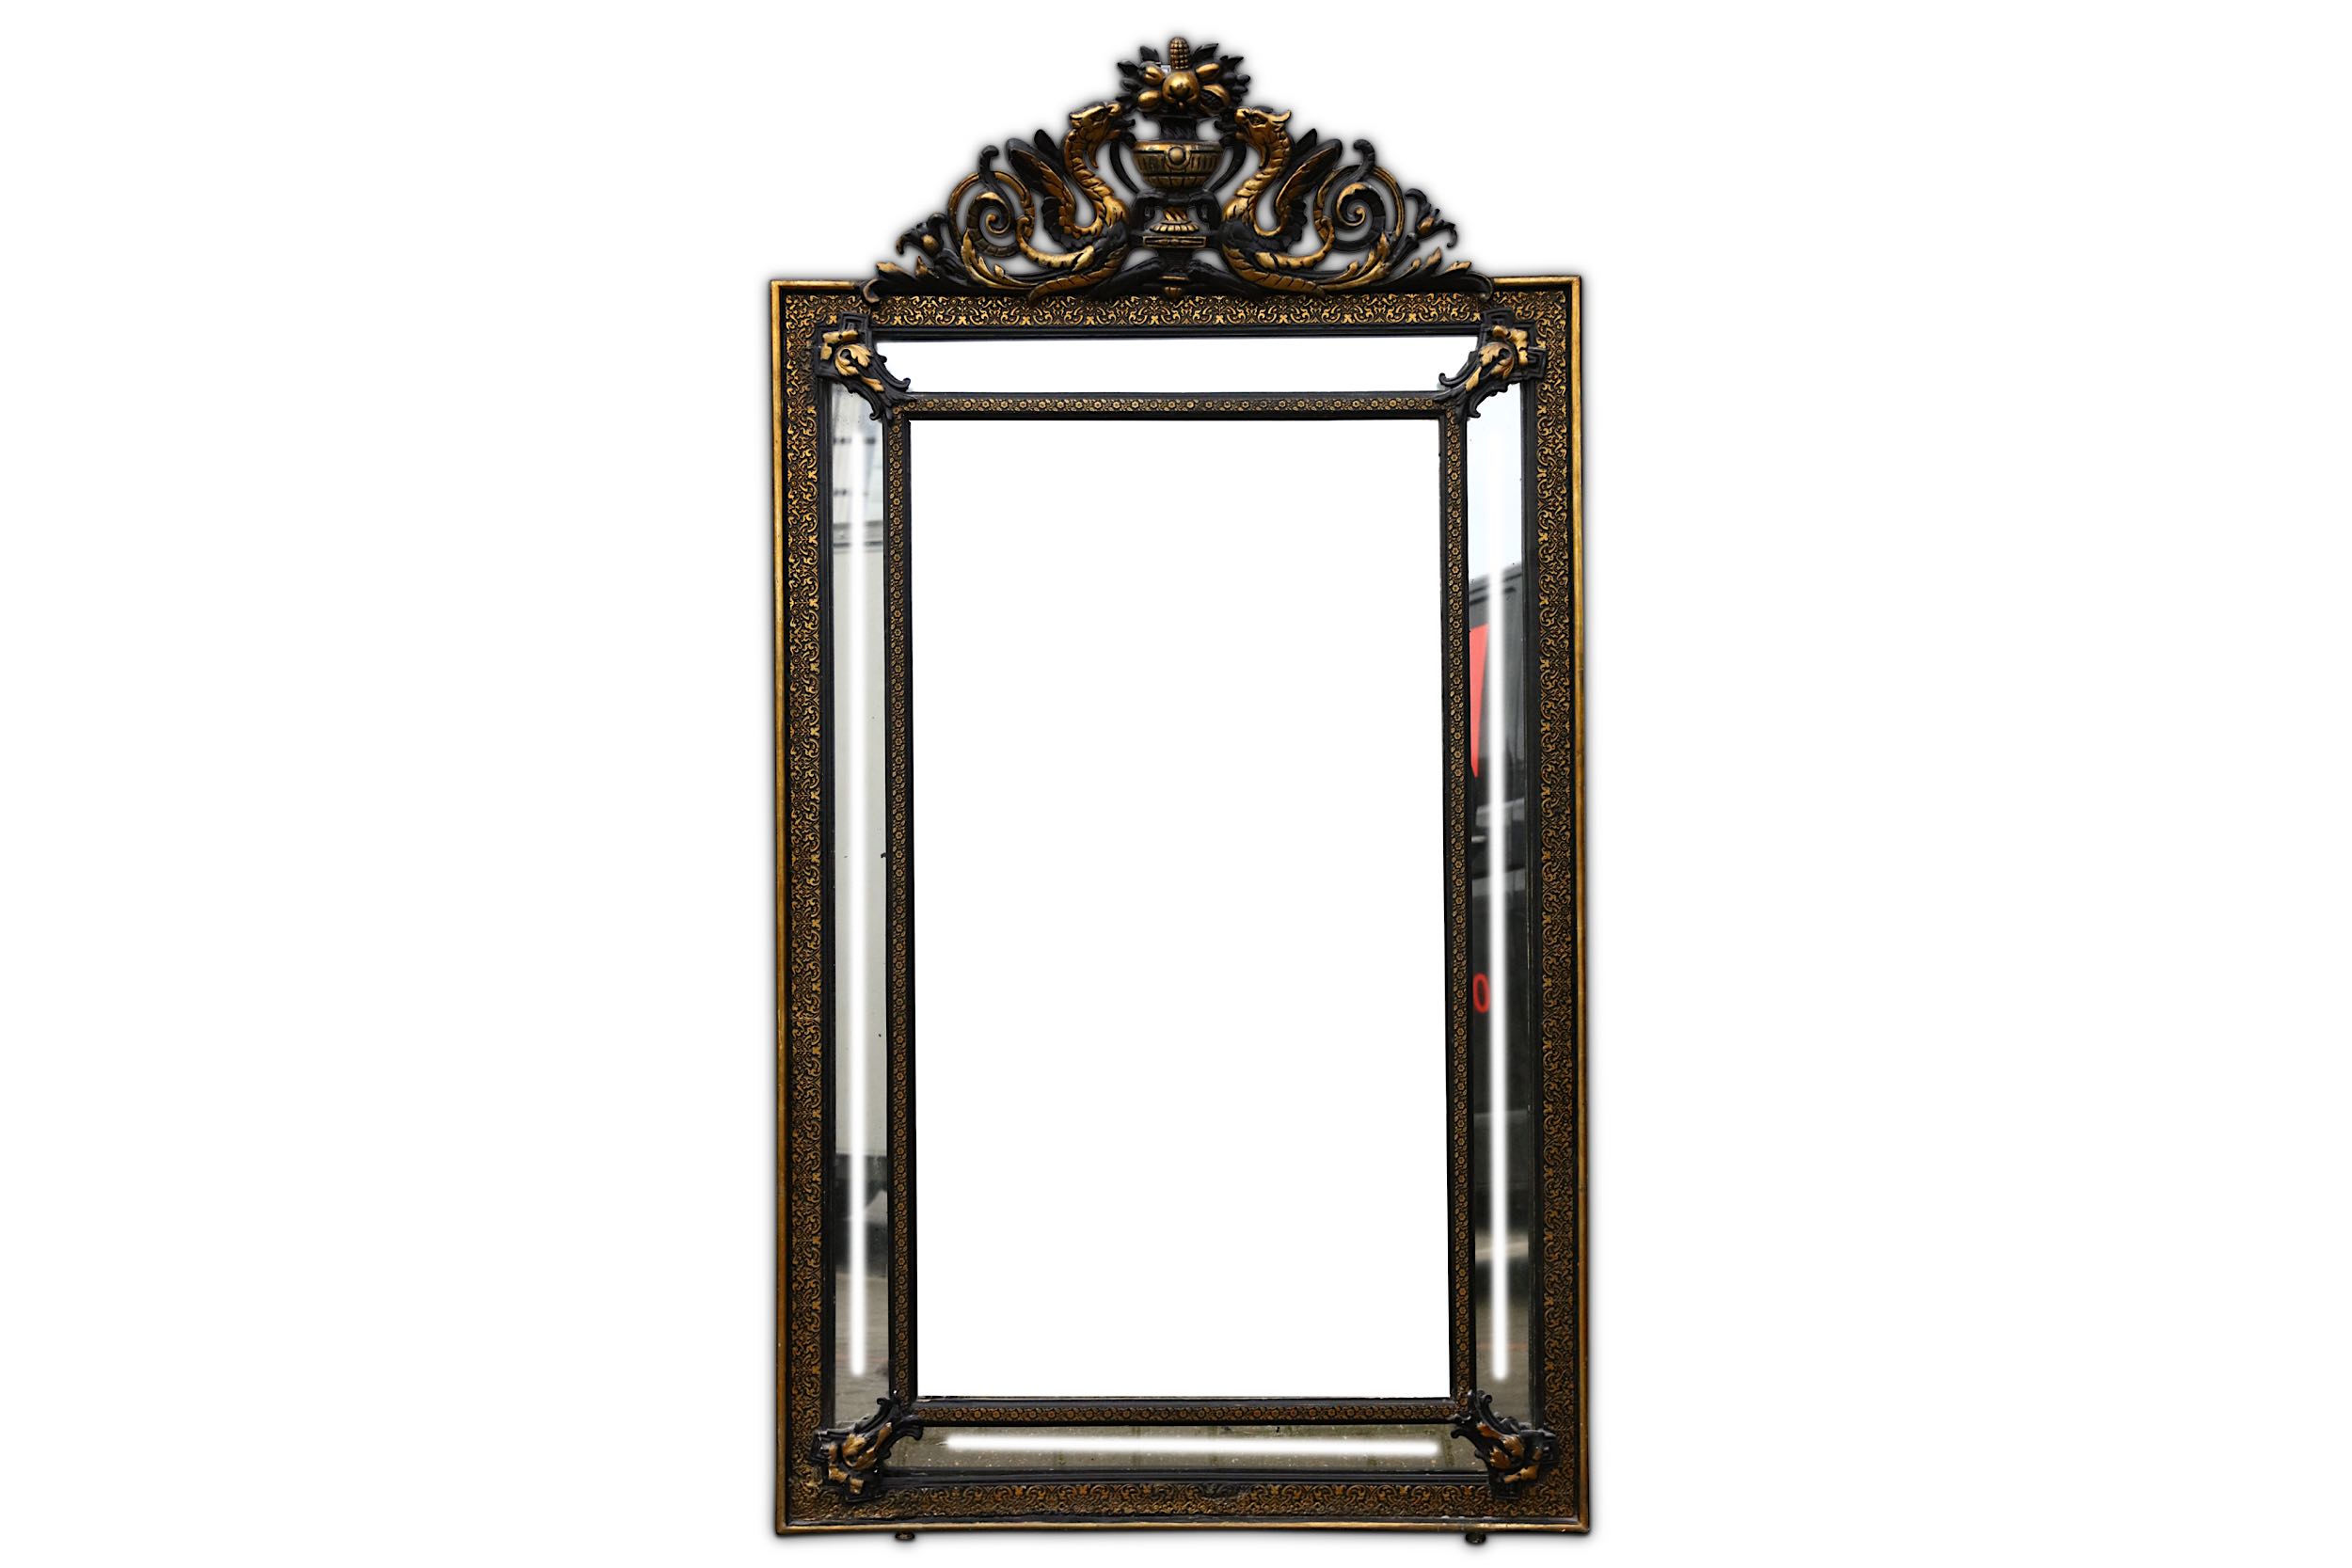 A French 19th century ebonised and parcel gilt cushion framed wall mirror